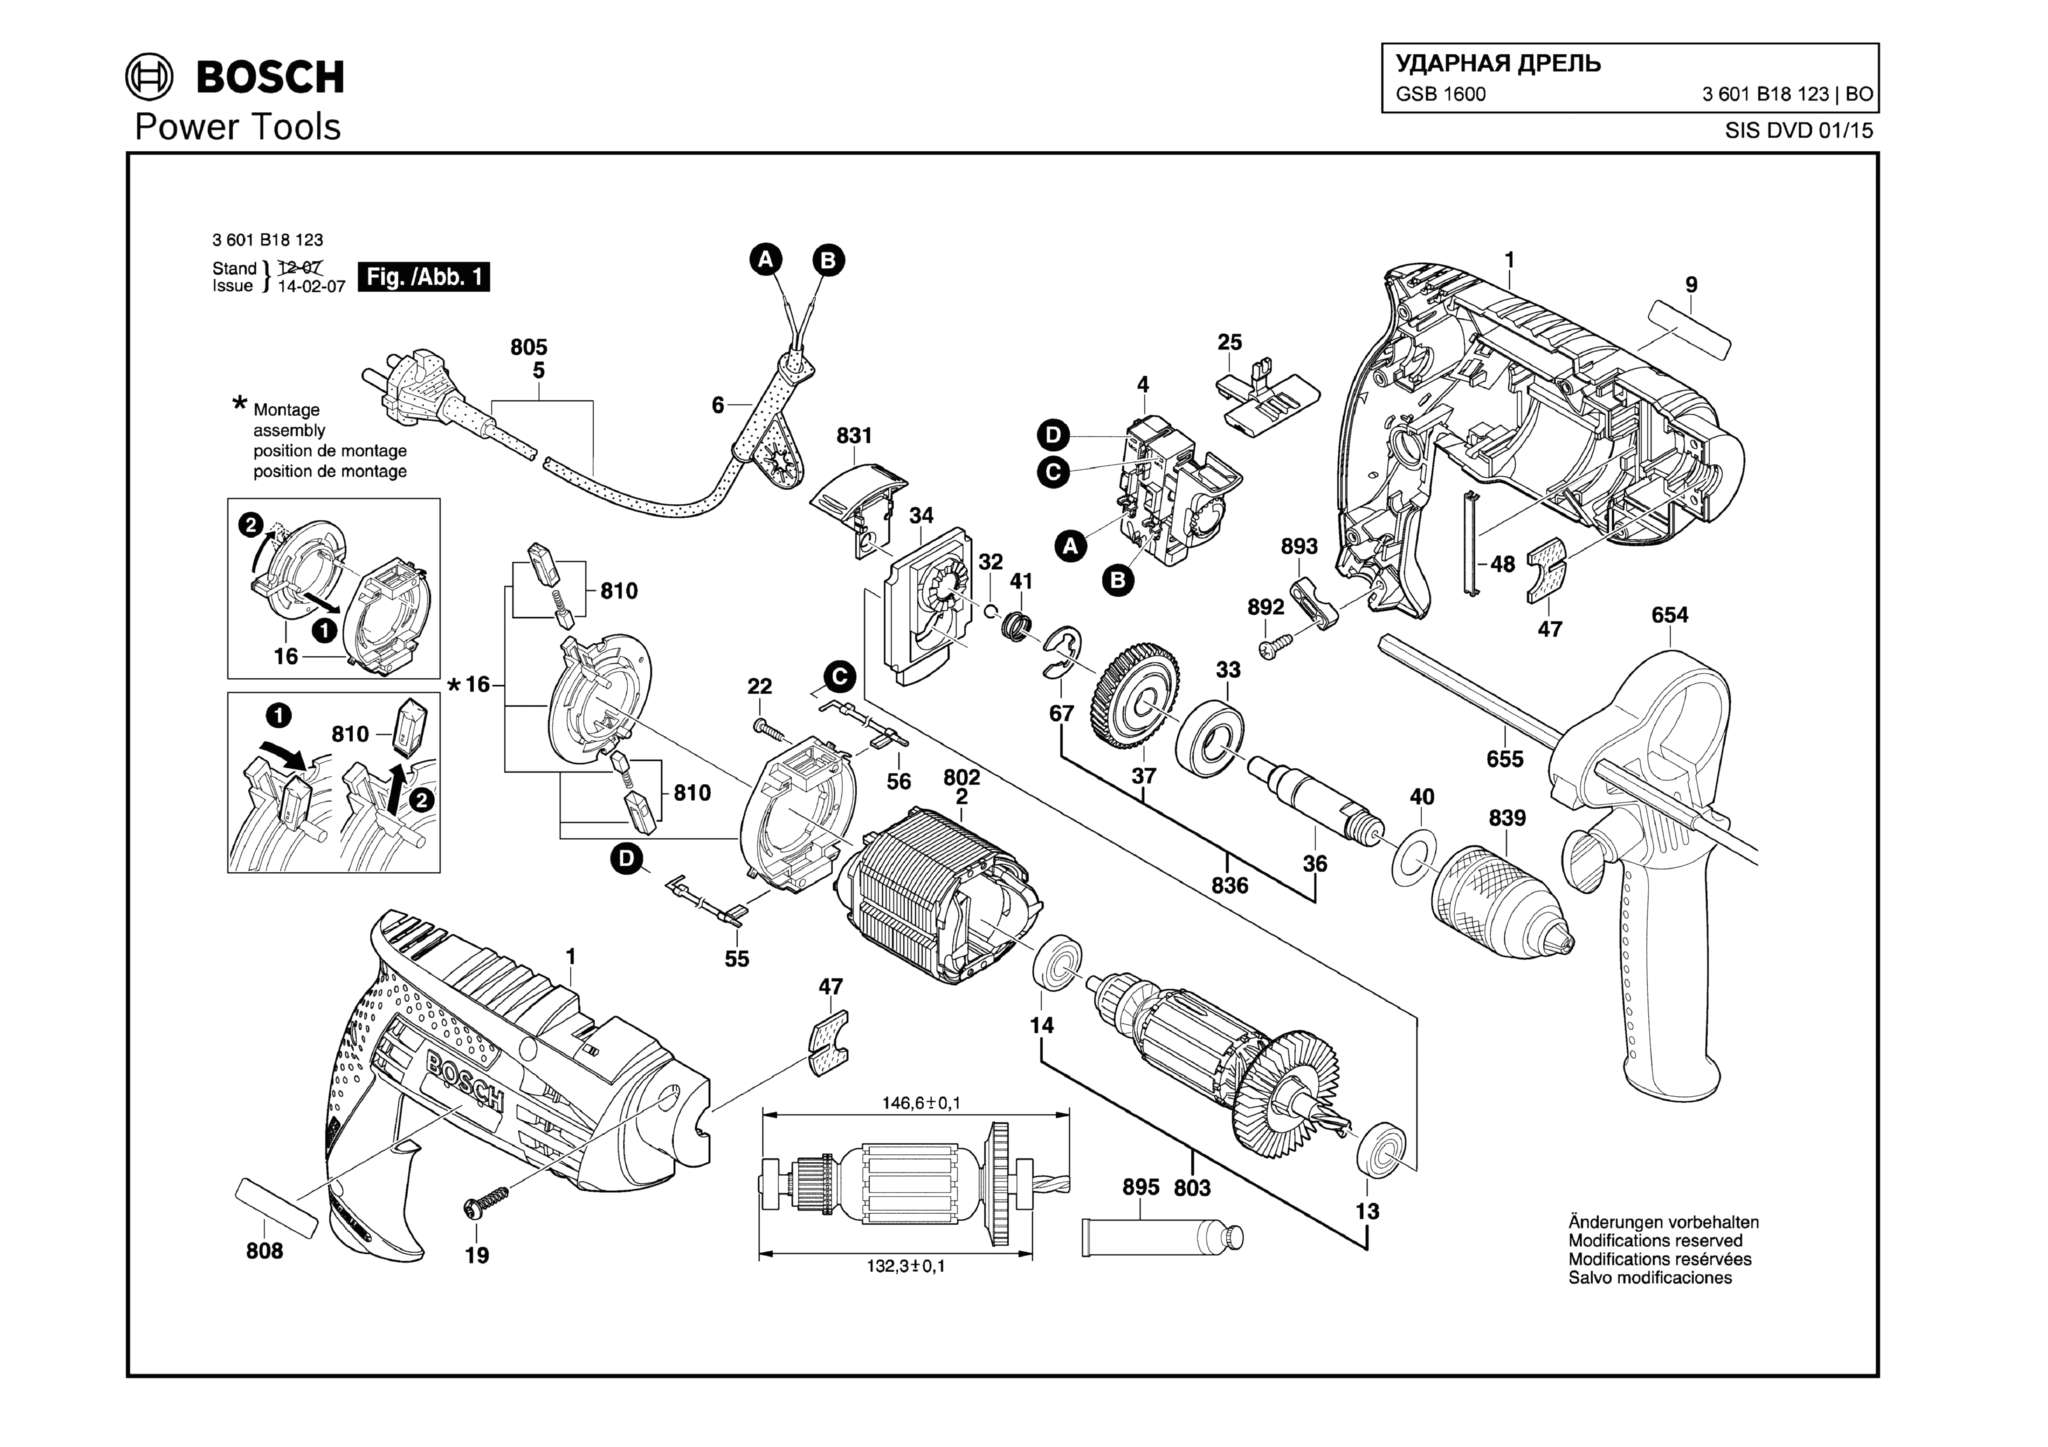 Запчасти, схема и деталировка Bosch GSB 1600 (ТИП 3601B18123)